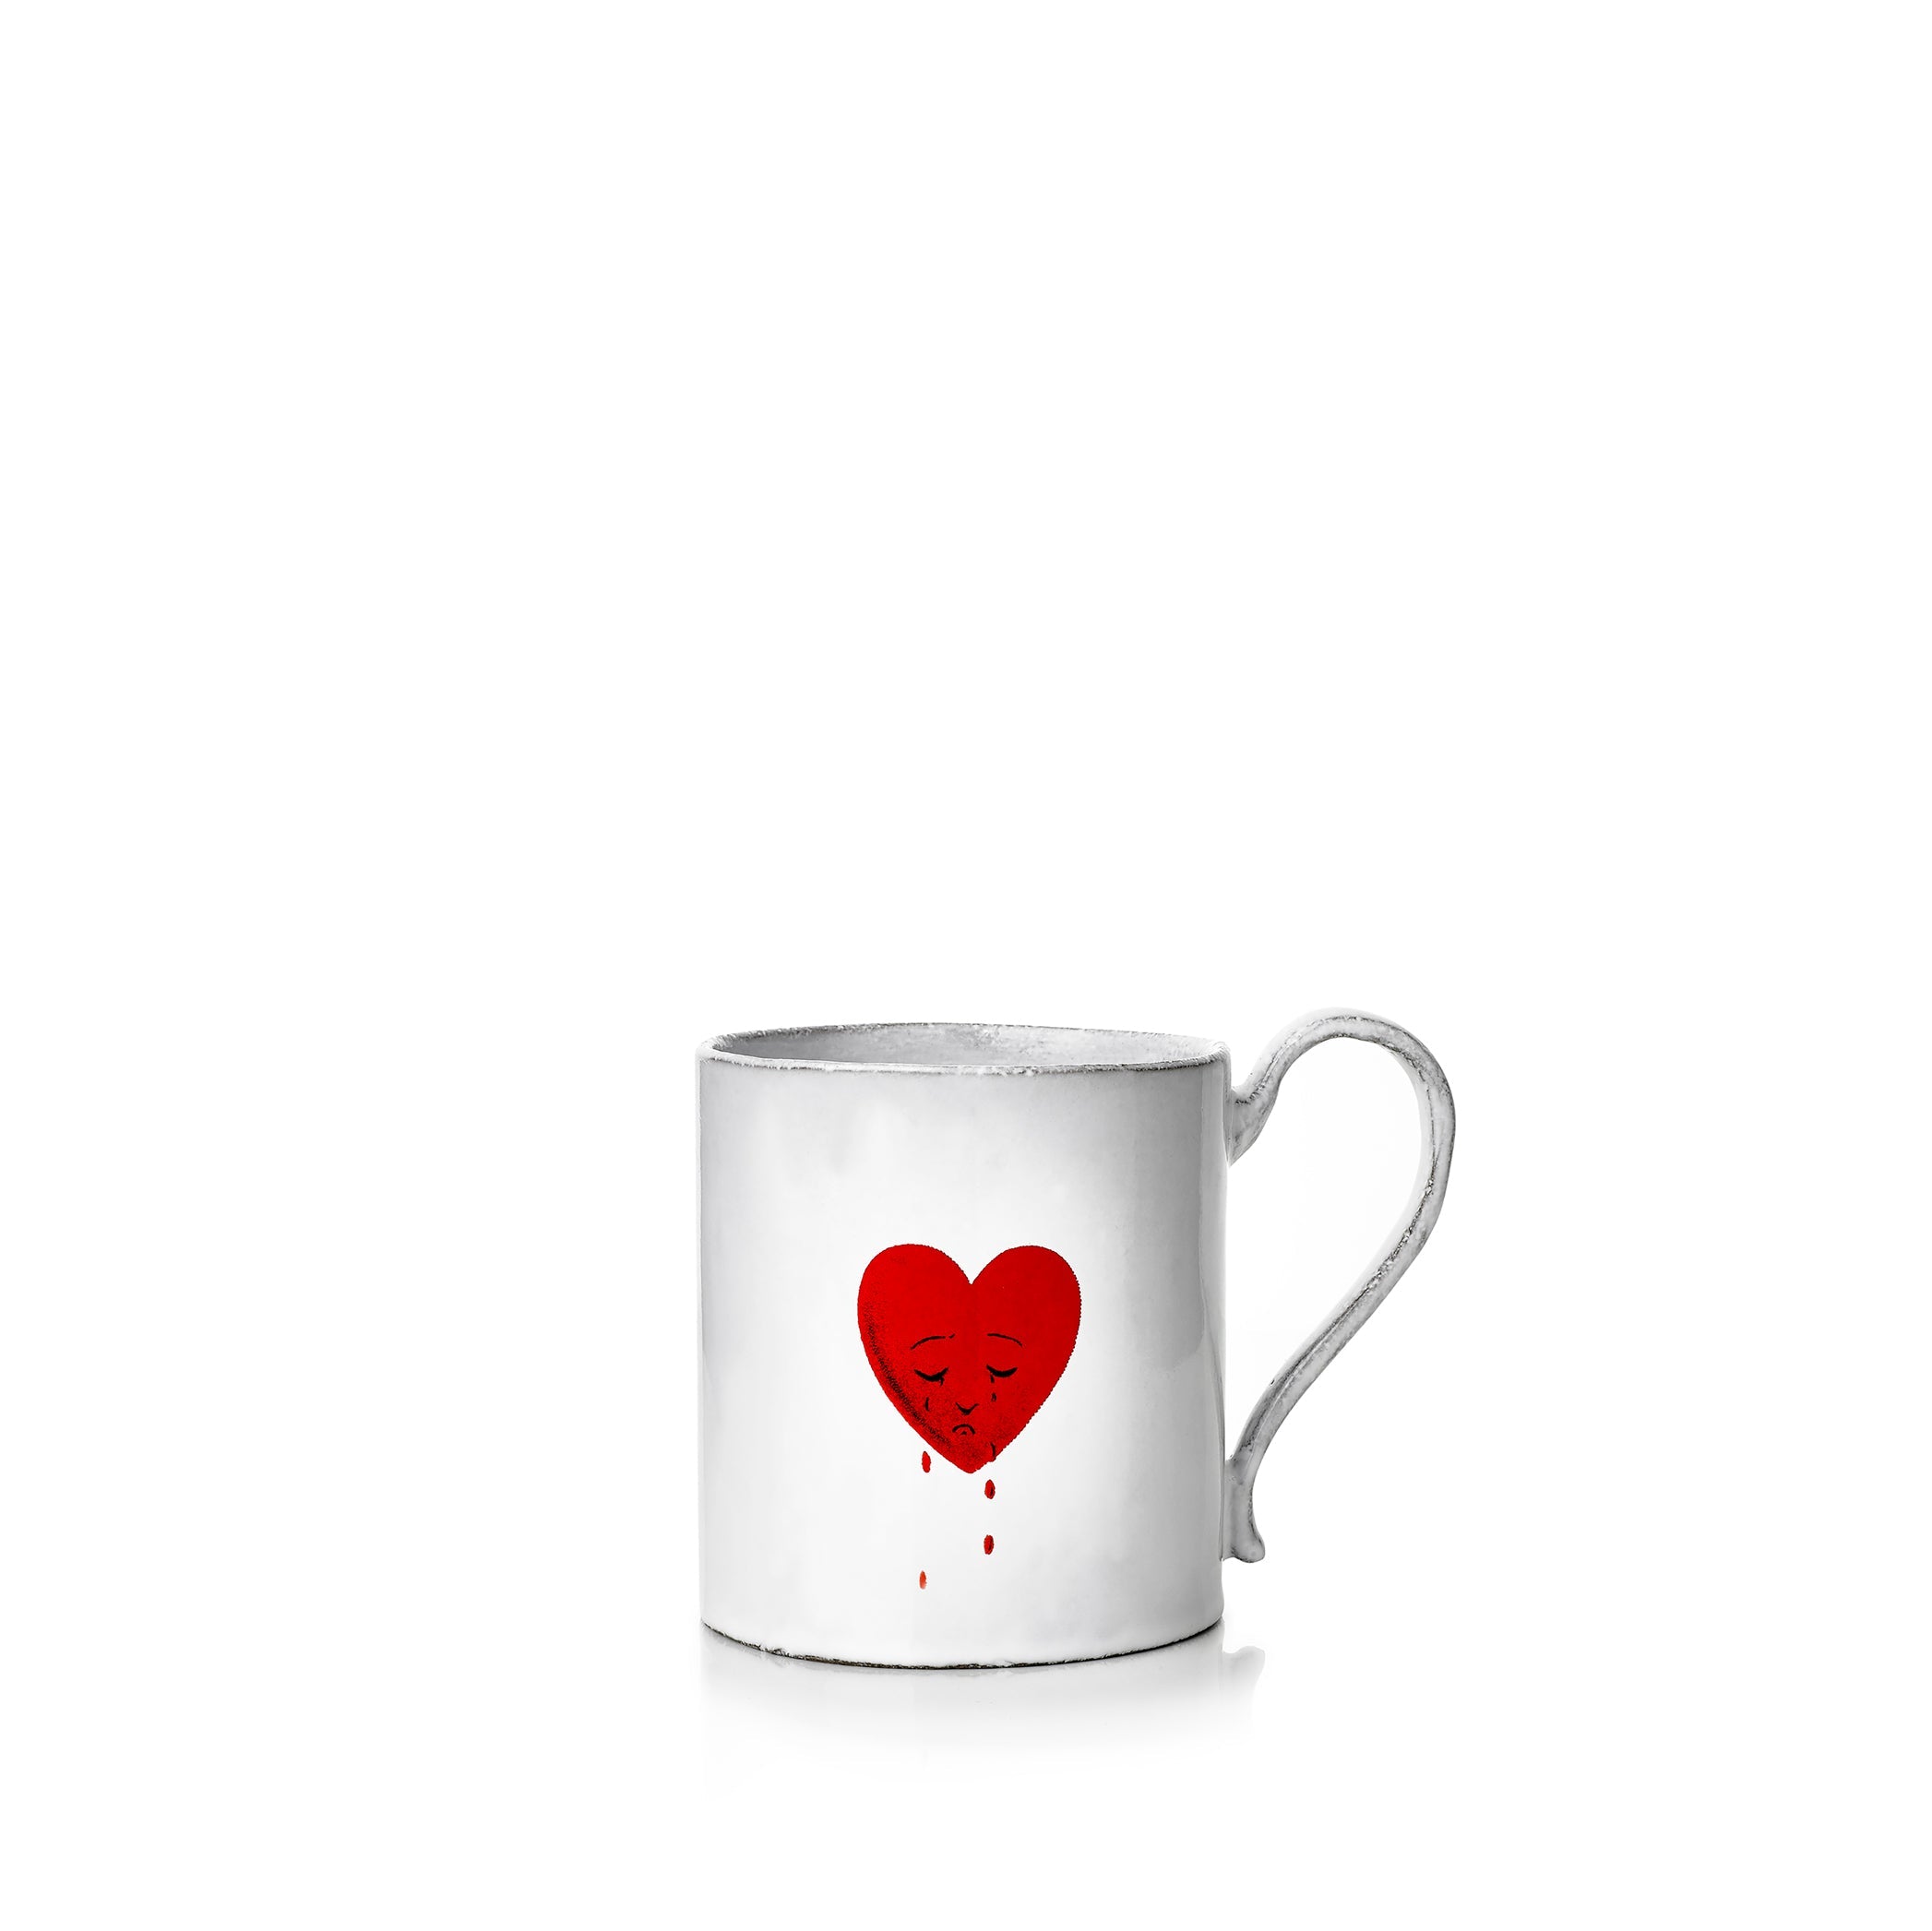 Crying Heart Mug by Astier de Villatte, 9cm